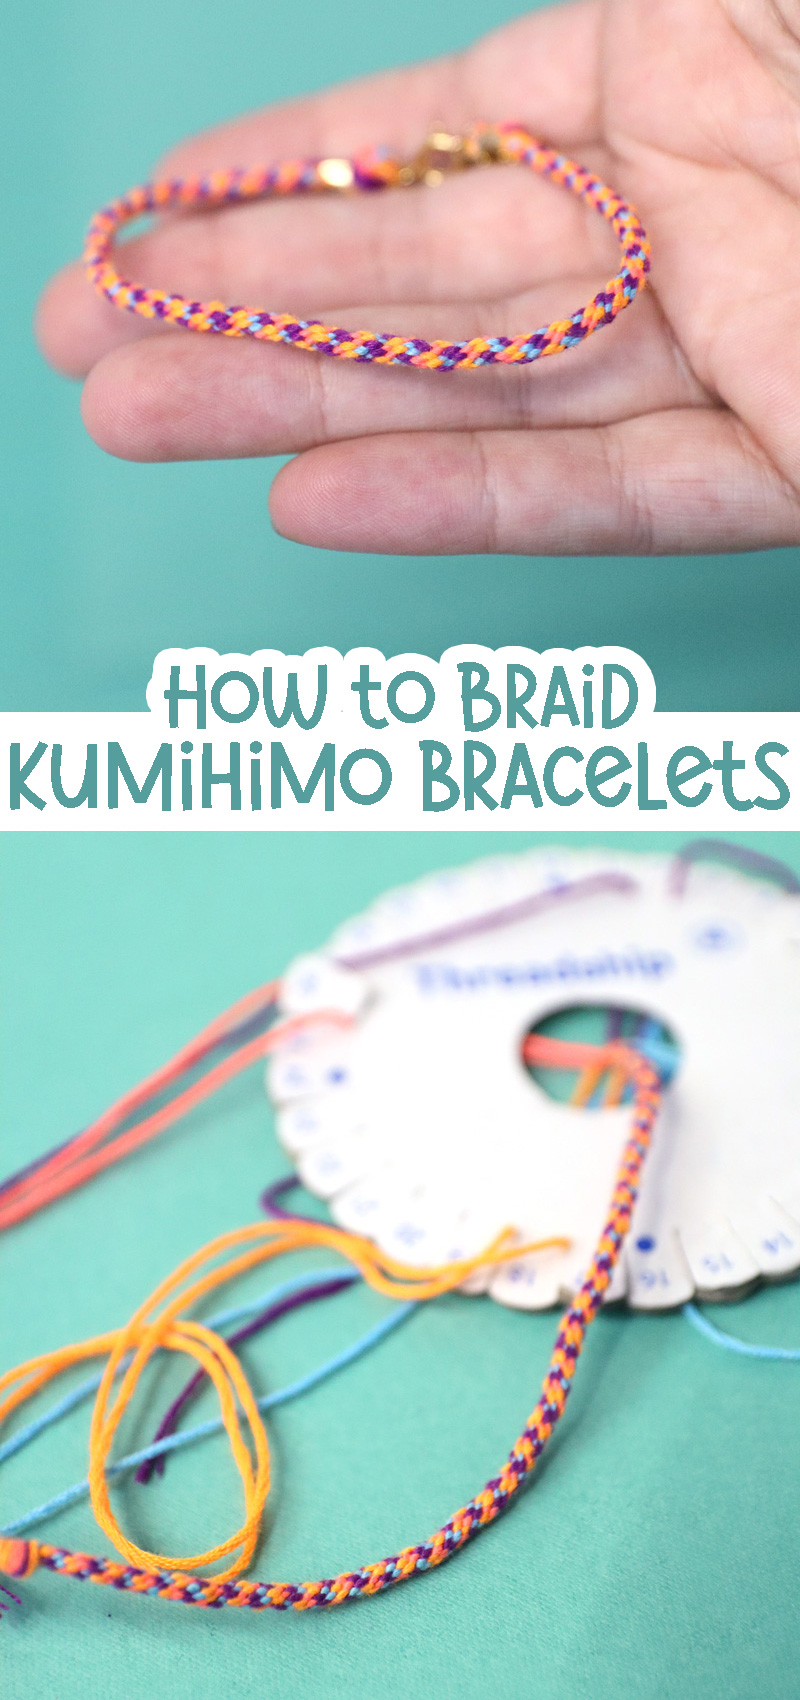 Bright-Green Beaded Bracelet: Kumihimo style; Elegant